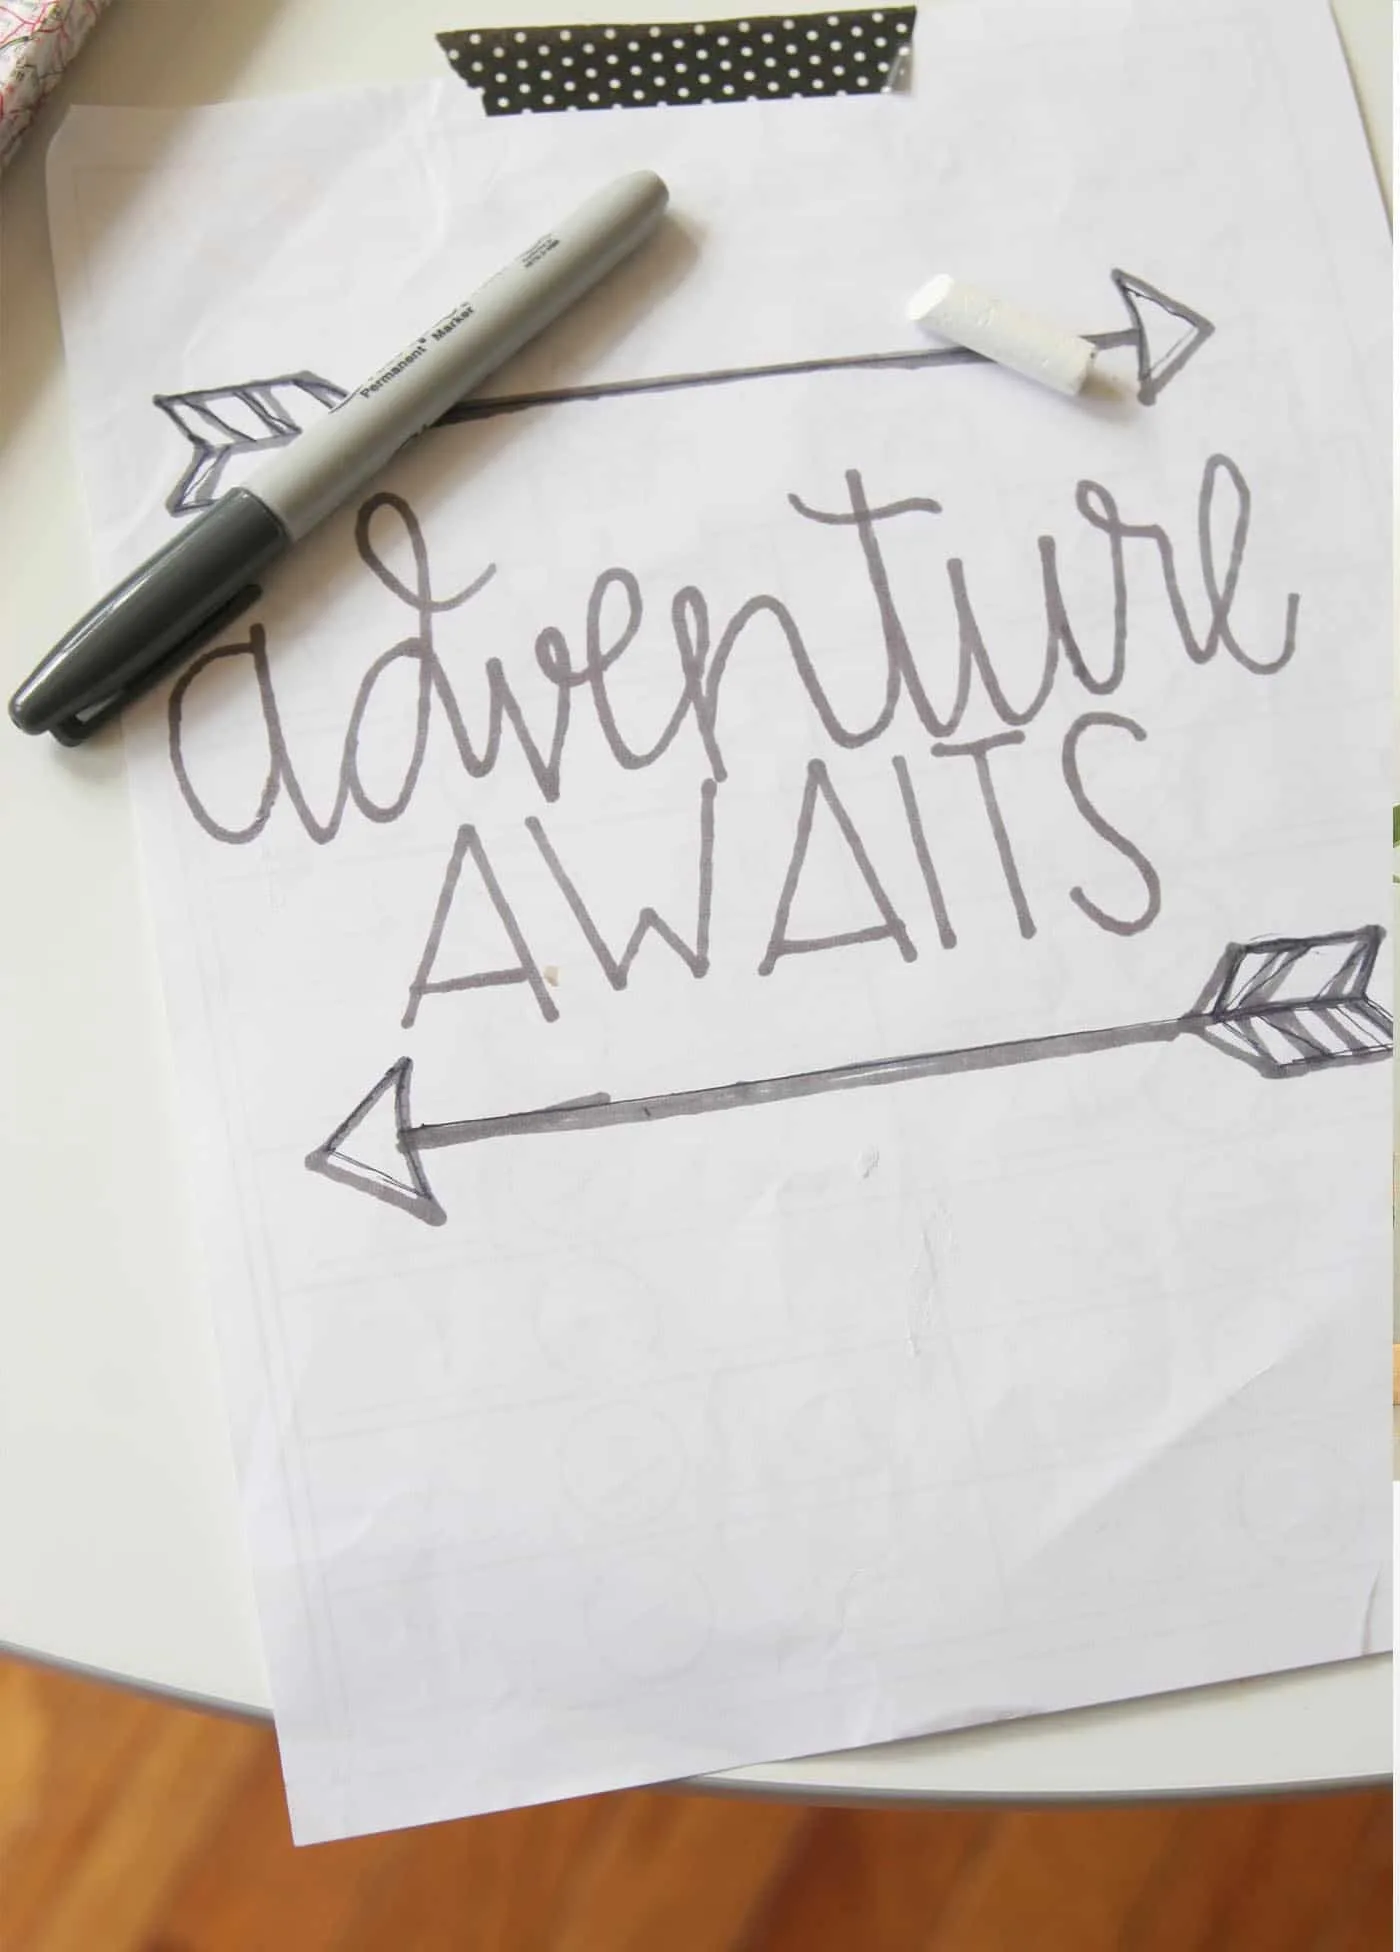 Adventure awaits written on paper with a Sharpie